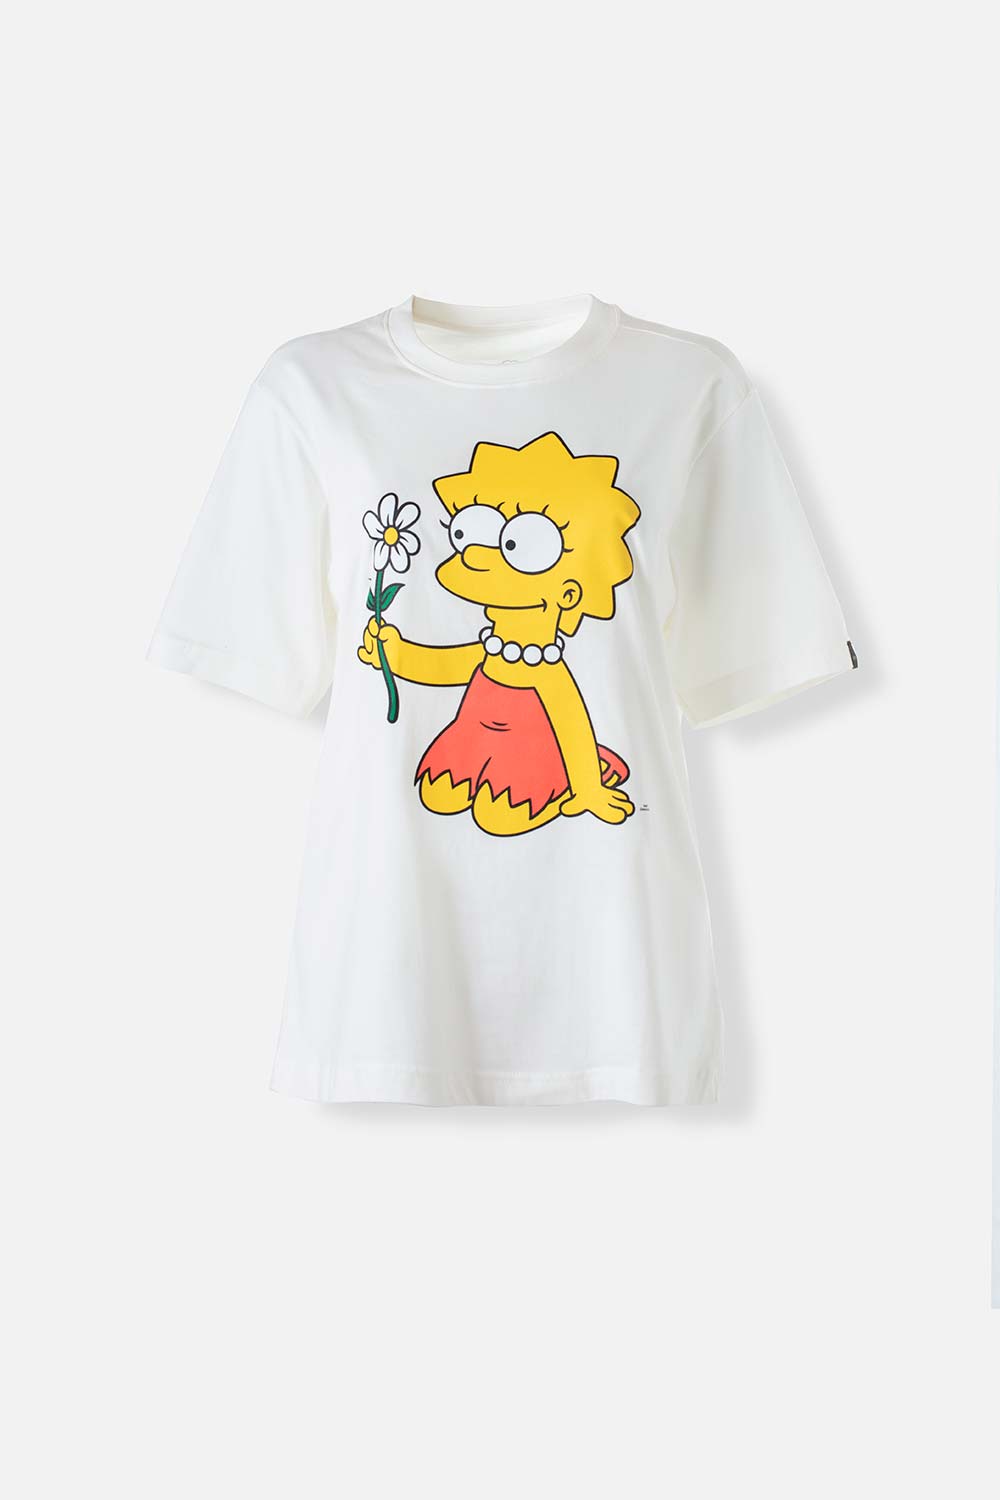 Camiseta de los Simpsons, marfil manga corta de mujer XS-0